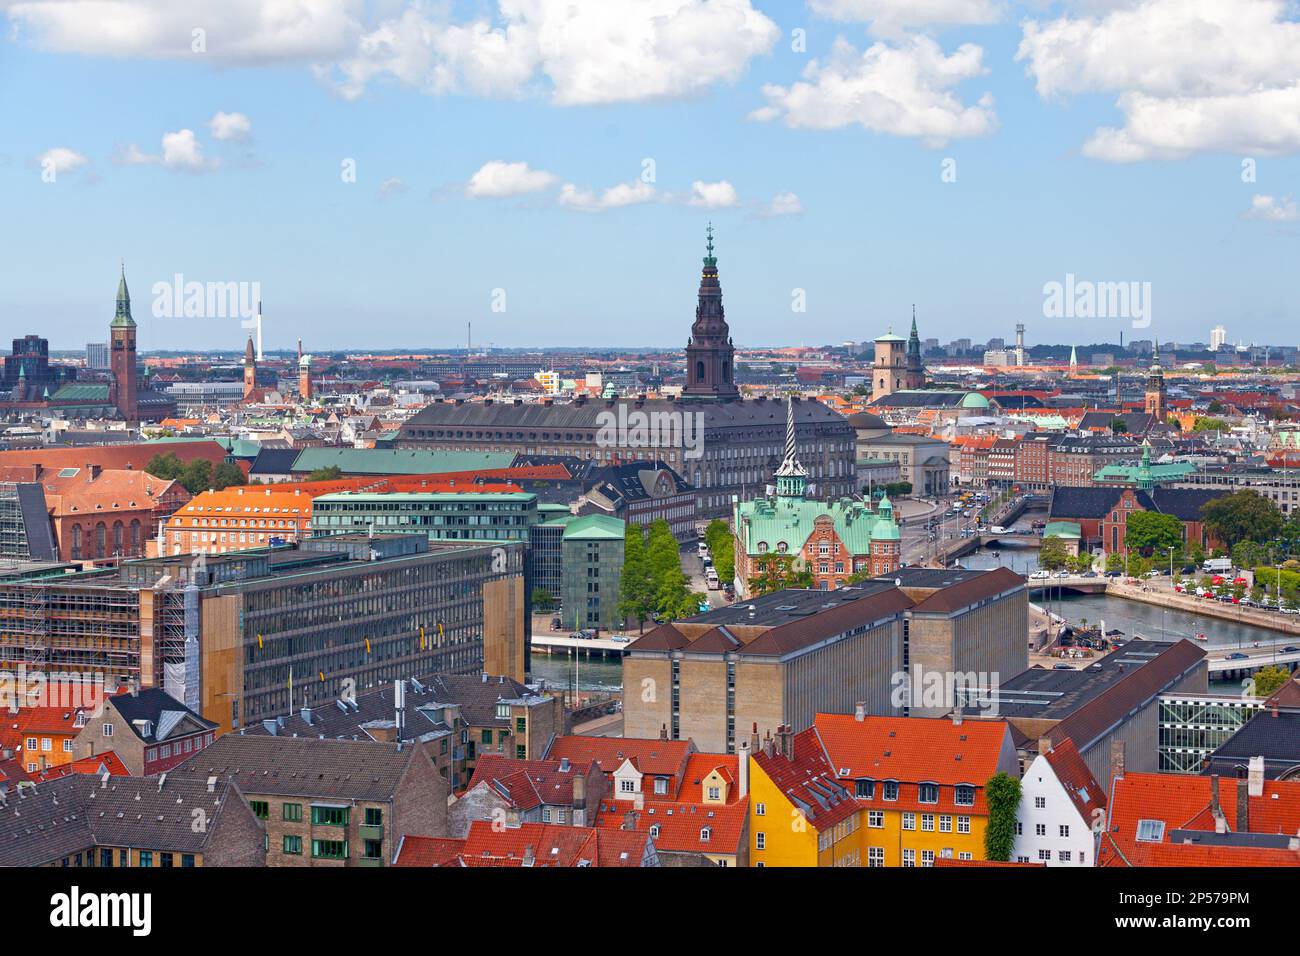 Copenhagen, Denmark - June 28 2019: Aerial view of the city with many landmarks: Copenhagen City Hall, Christiansborg Palace, Børsen and others. Stock Photo